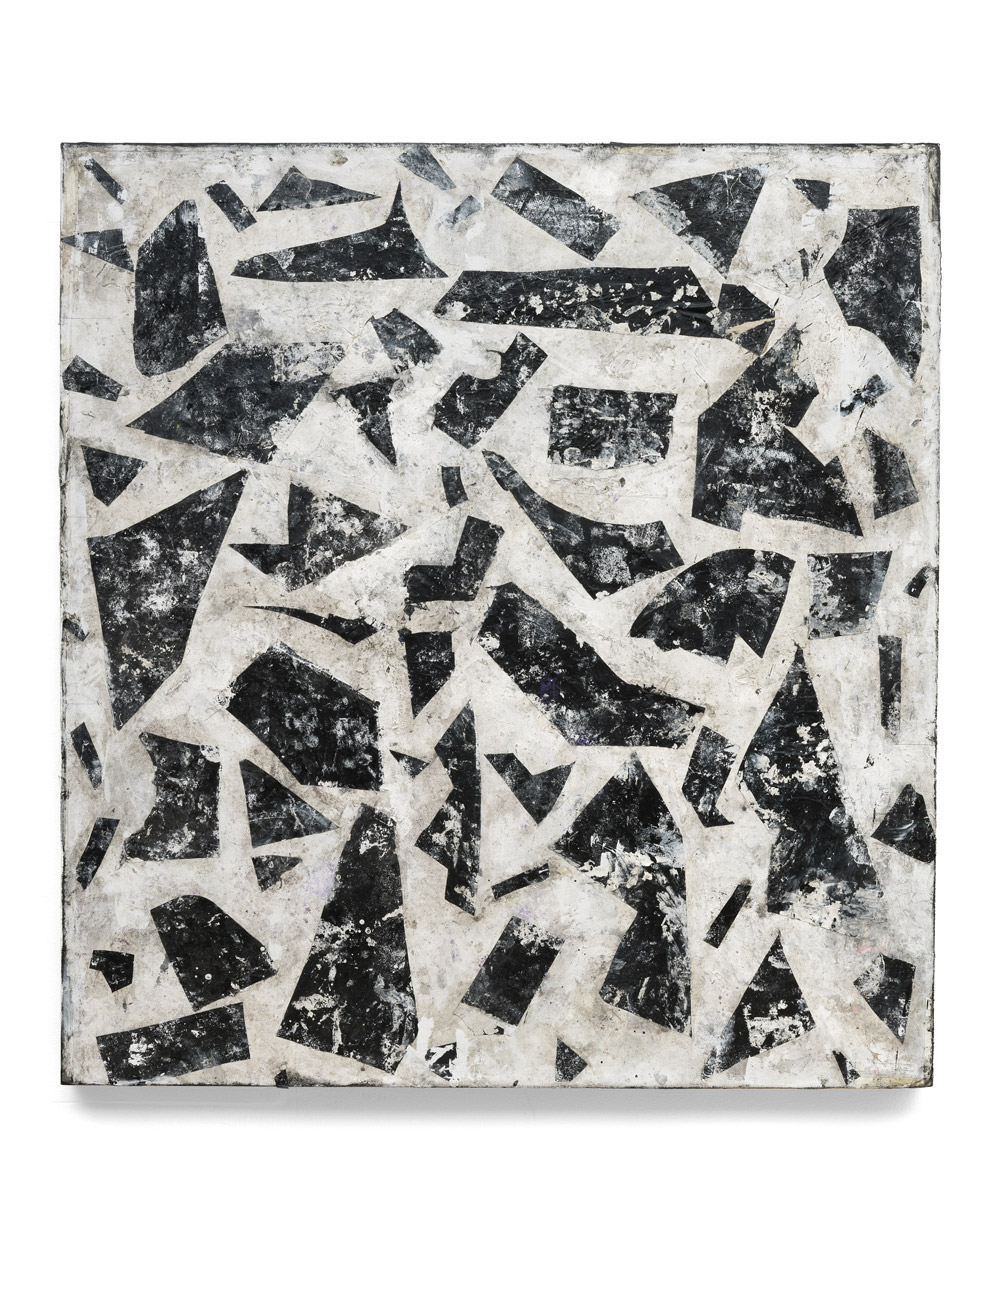 Greg Haberny Paper Or Plastic 2016 127 × 120 × 10 cm